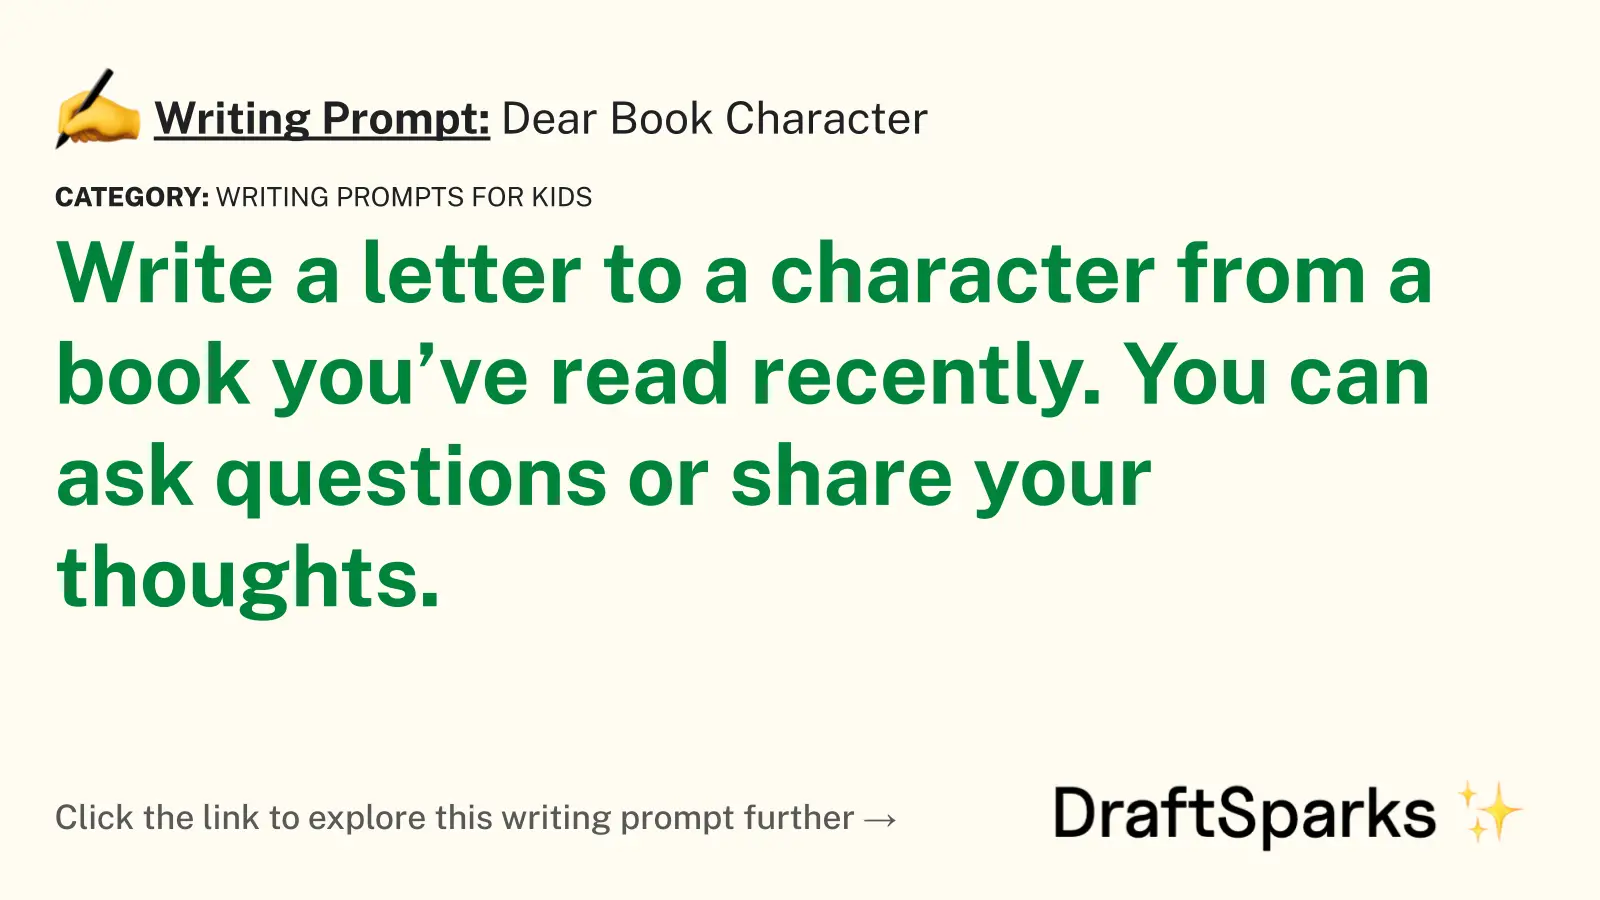 Dear Book Character